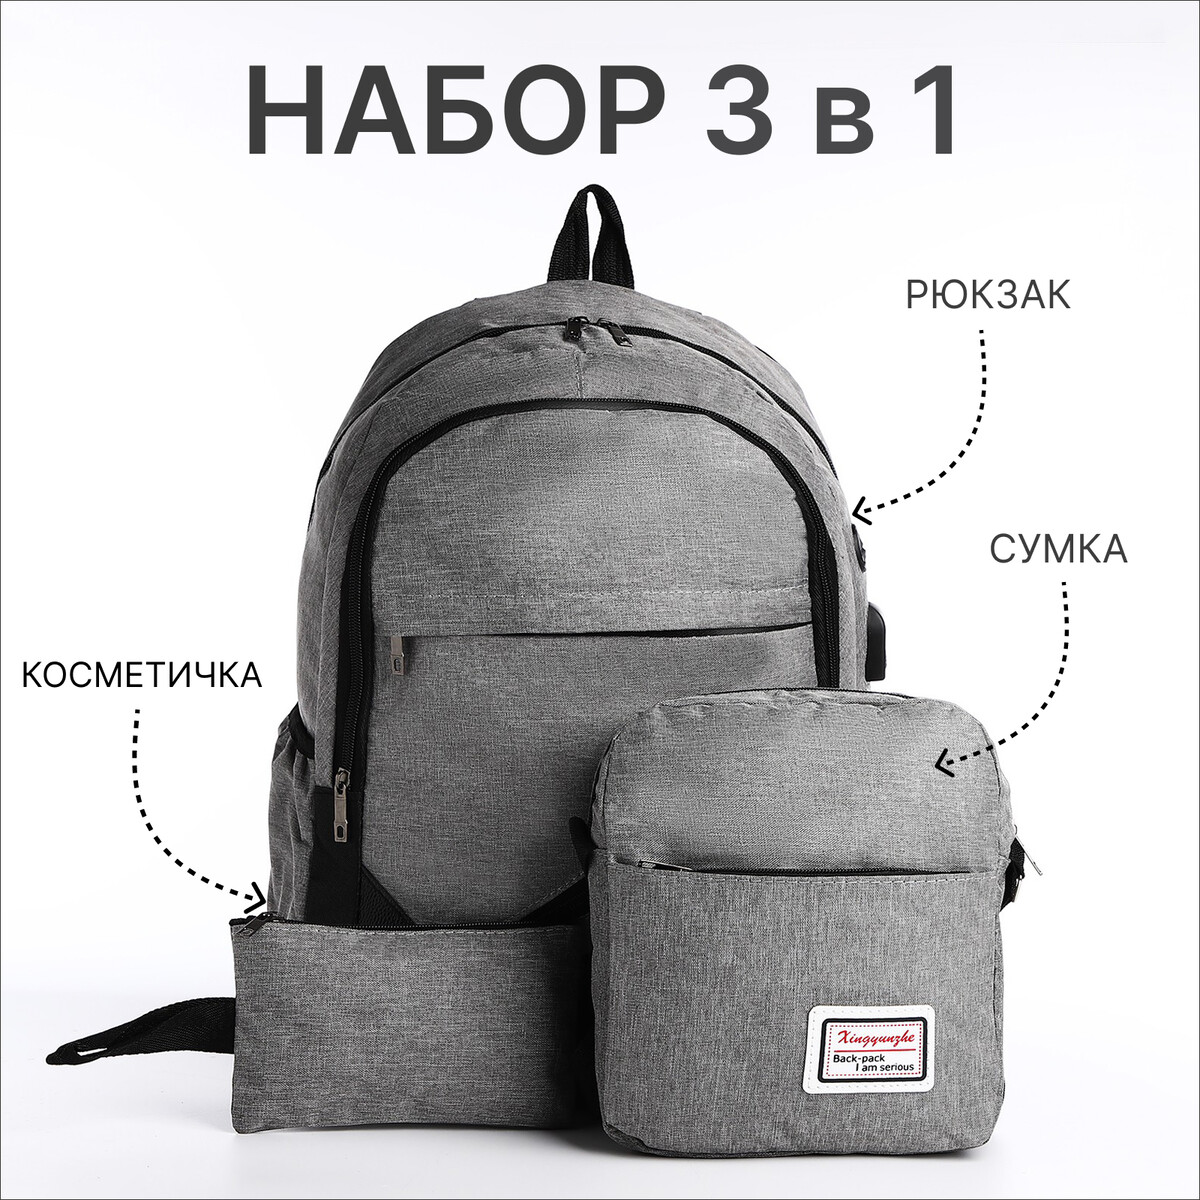 Рюкзак на молнии, с usb, 4 наружных кармана, сумка, пенал, цвет серый